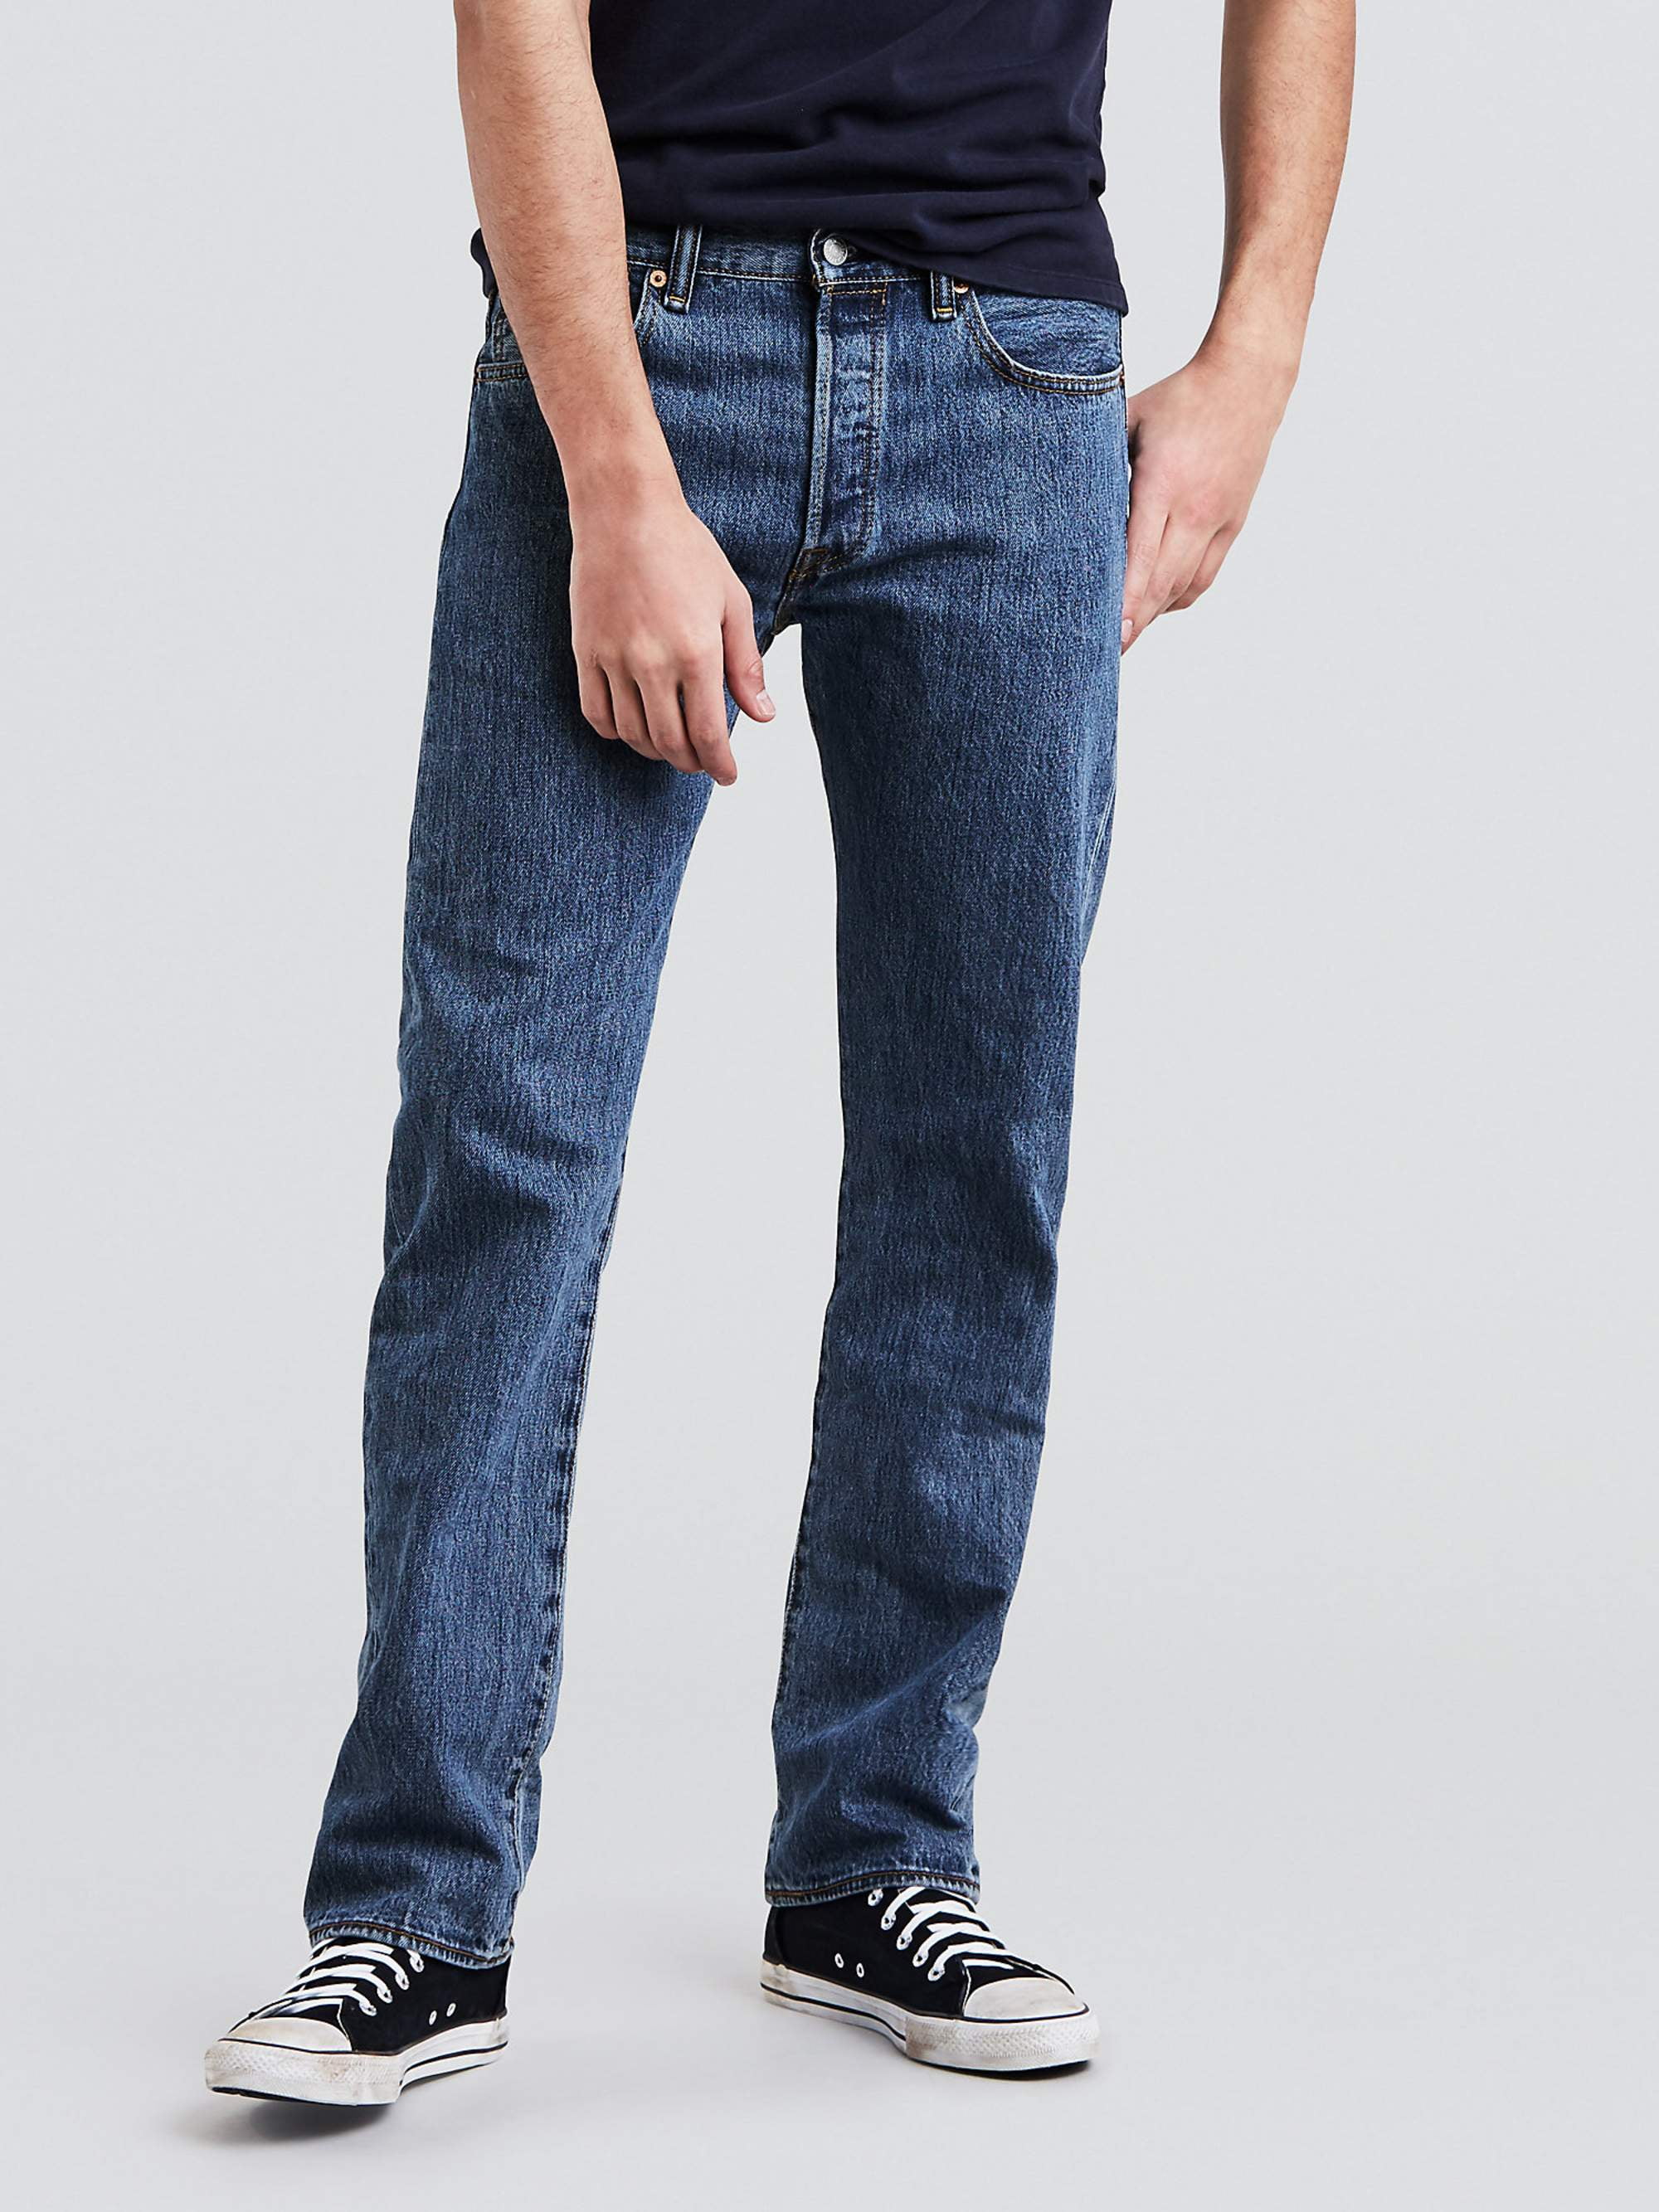 Levi'S Men'S 501 Original Fit Jeans - Walmart.Com